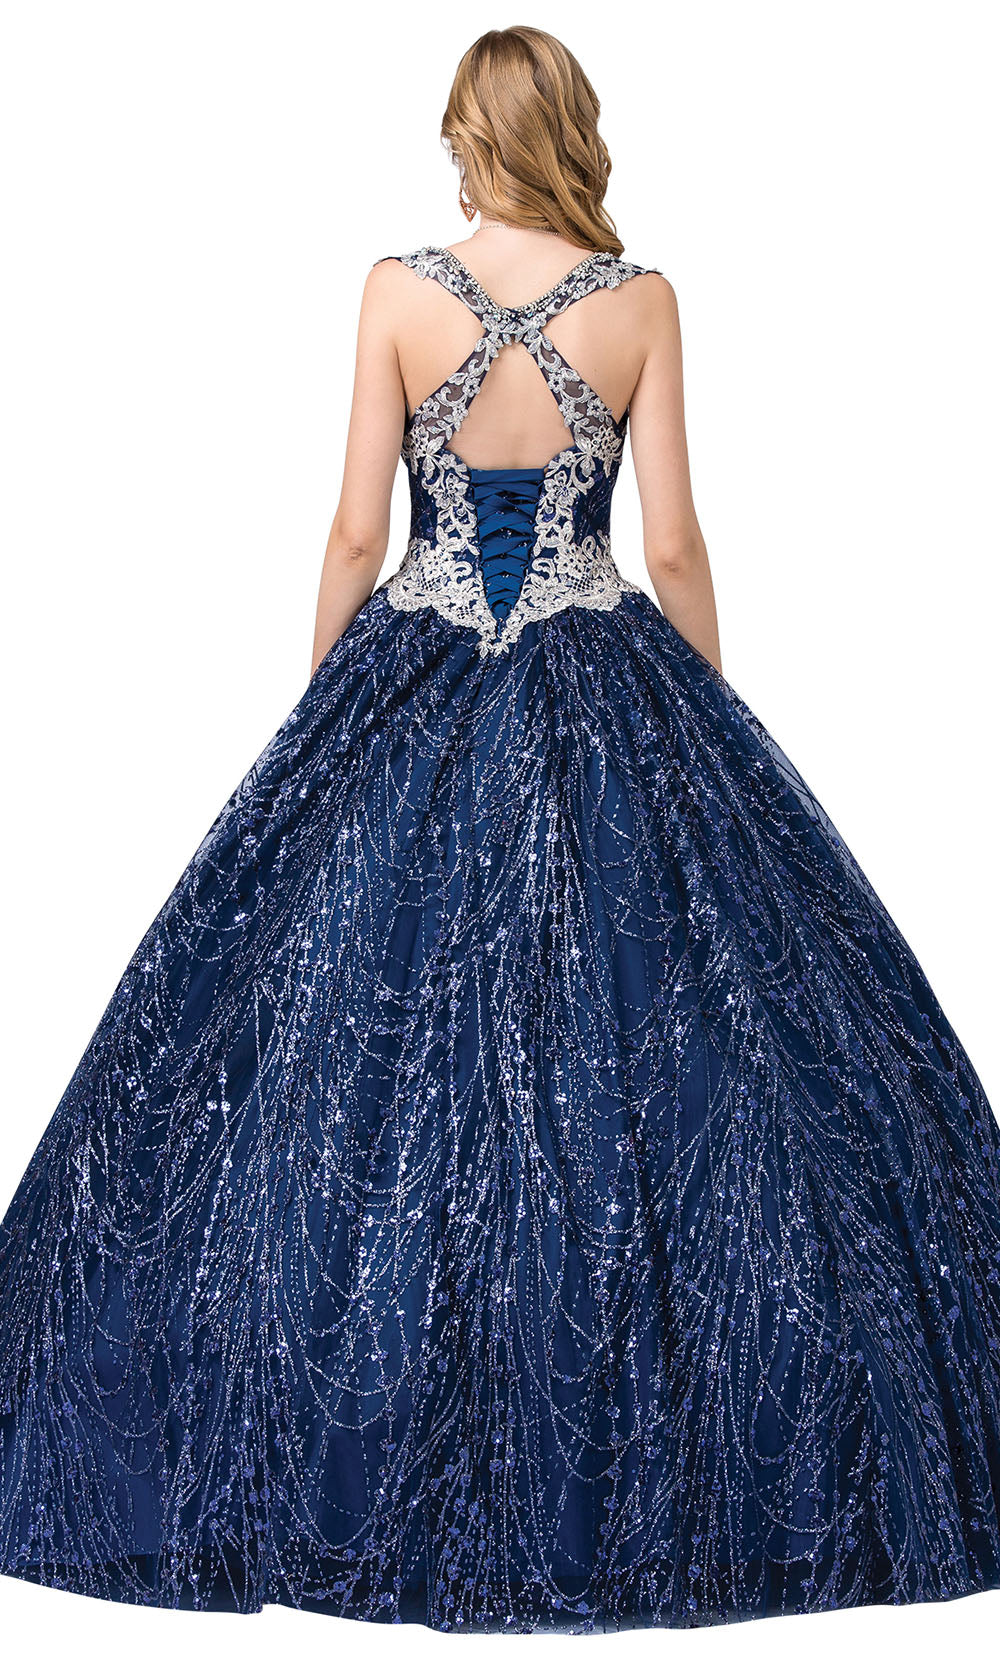 Dancing Queen - 1396 Scallop Trimmed Glitter Print Ballgown In Blue